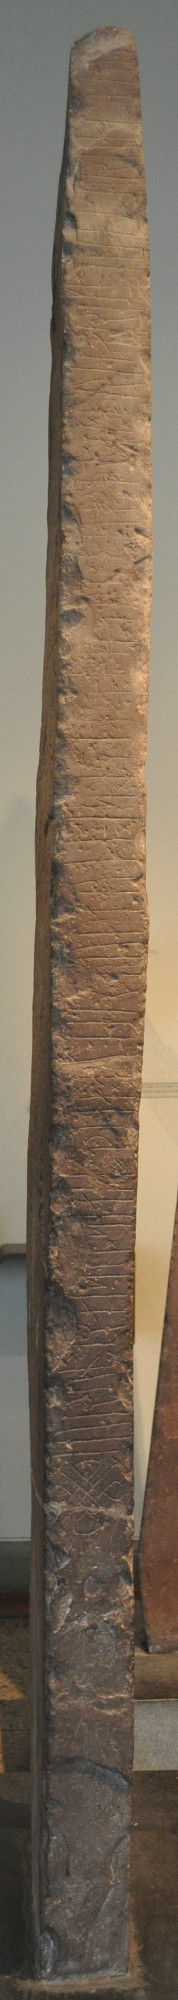 Côté de la pierre runique d'Alstad